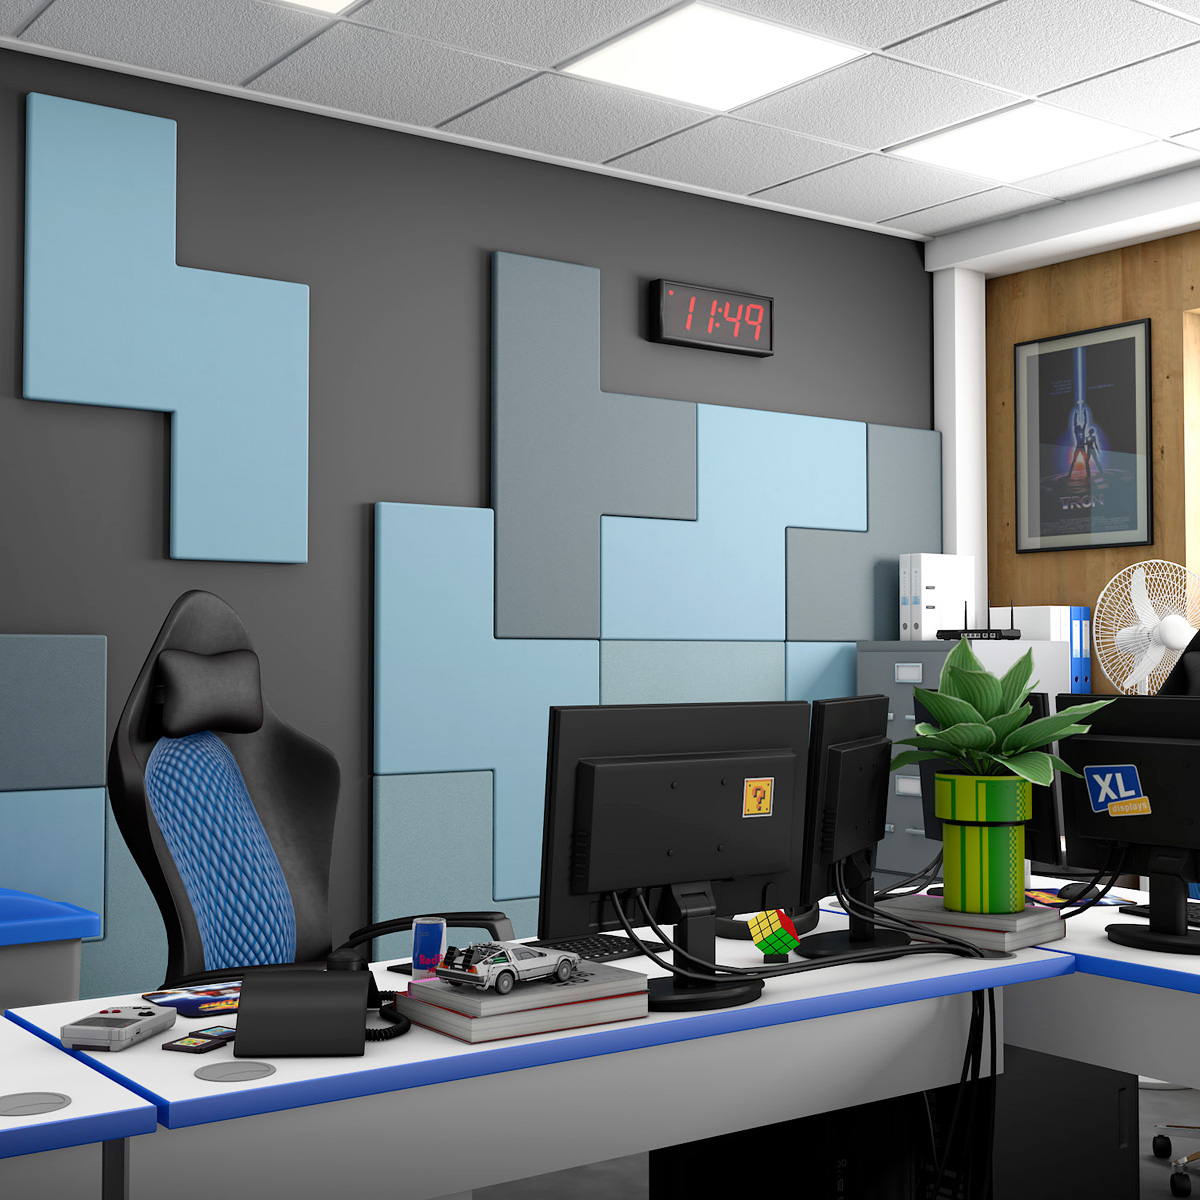 TETRATAK™ Tetris Style Acoustic Panels Create Fun & Decorative Wall Designs 